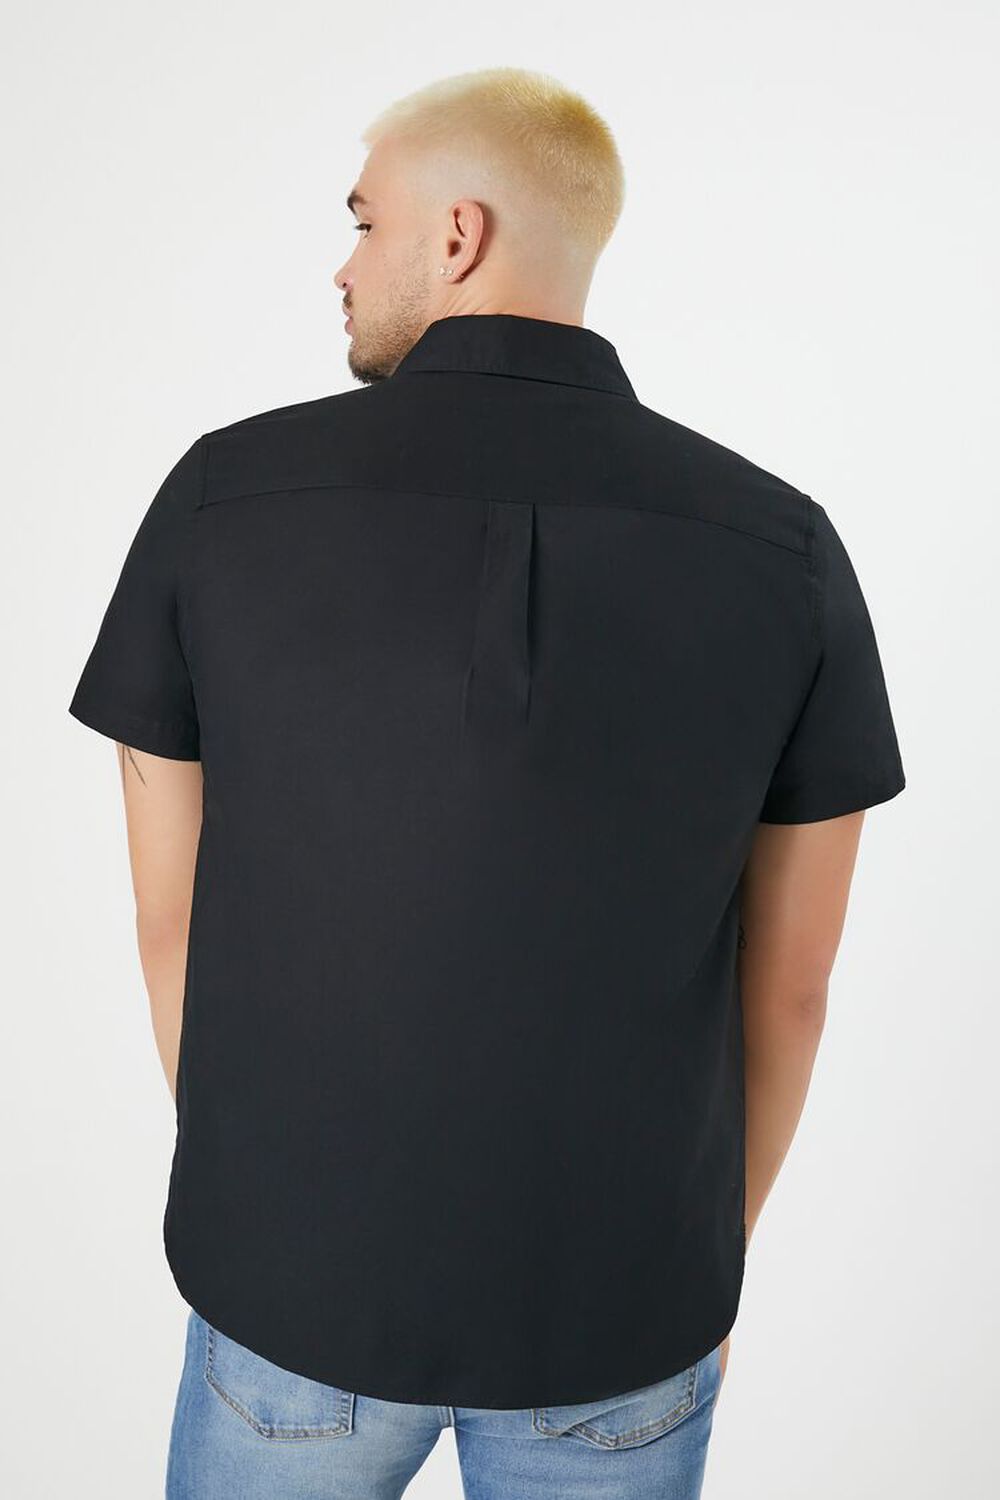 BLACK Short-Sleeve Oxford Shirt, image 3